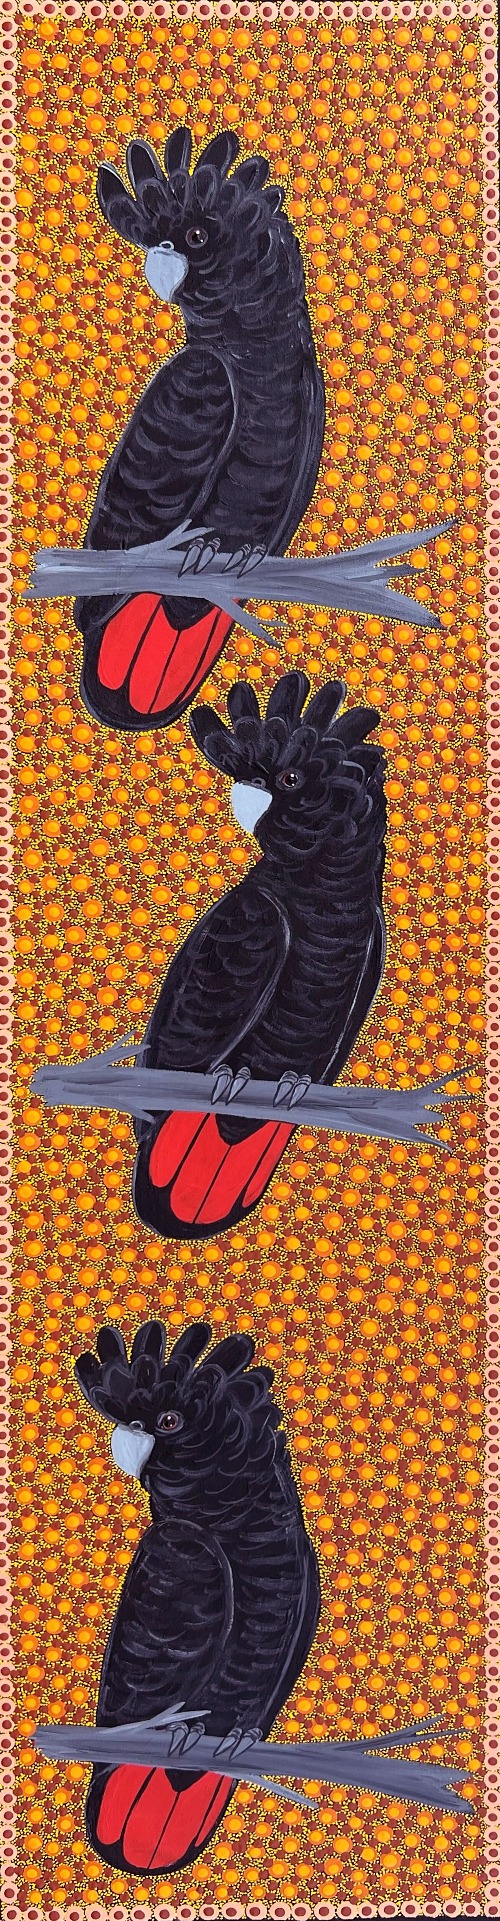 Red Tail Black Cockatoos - KBZG0691